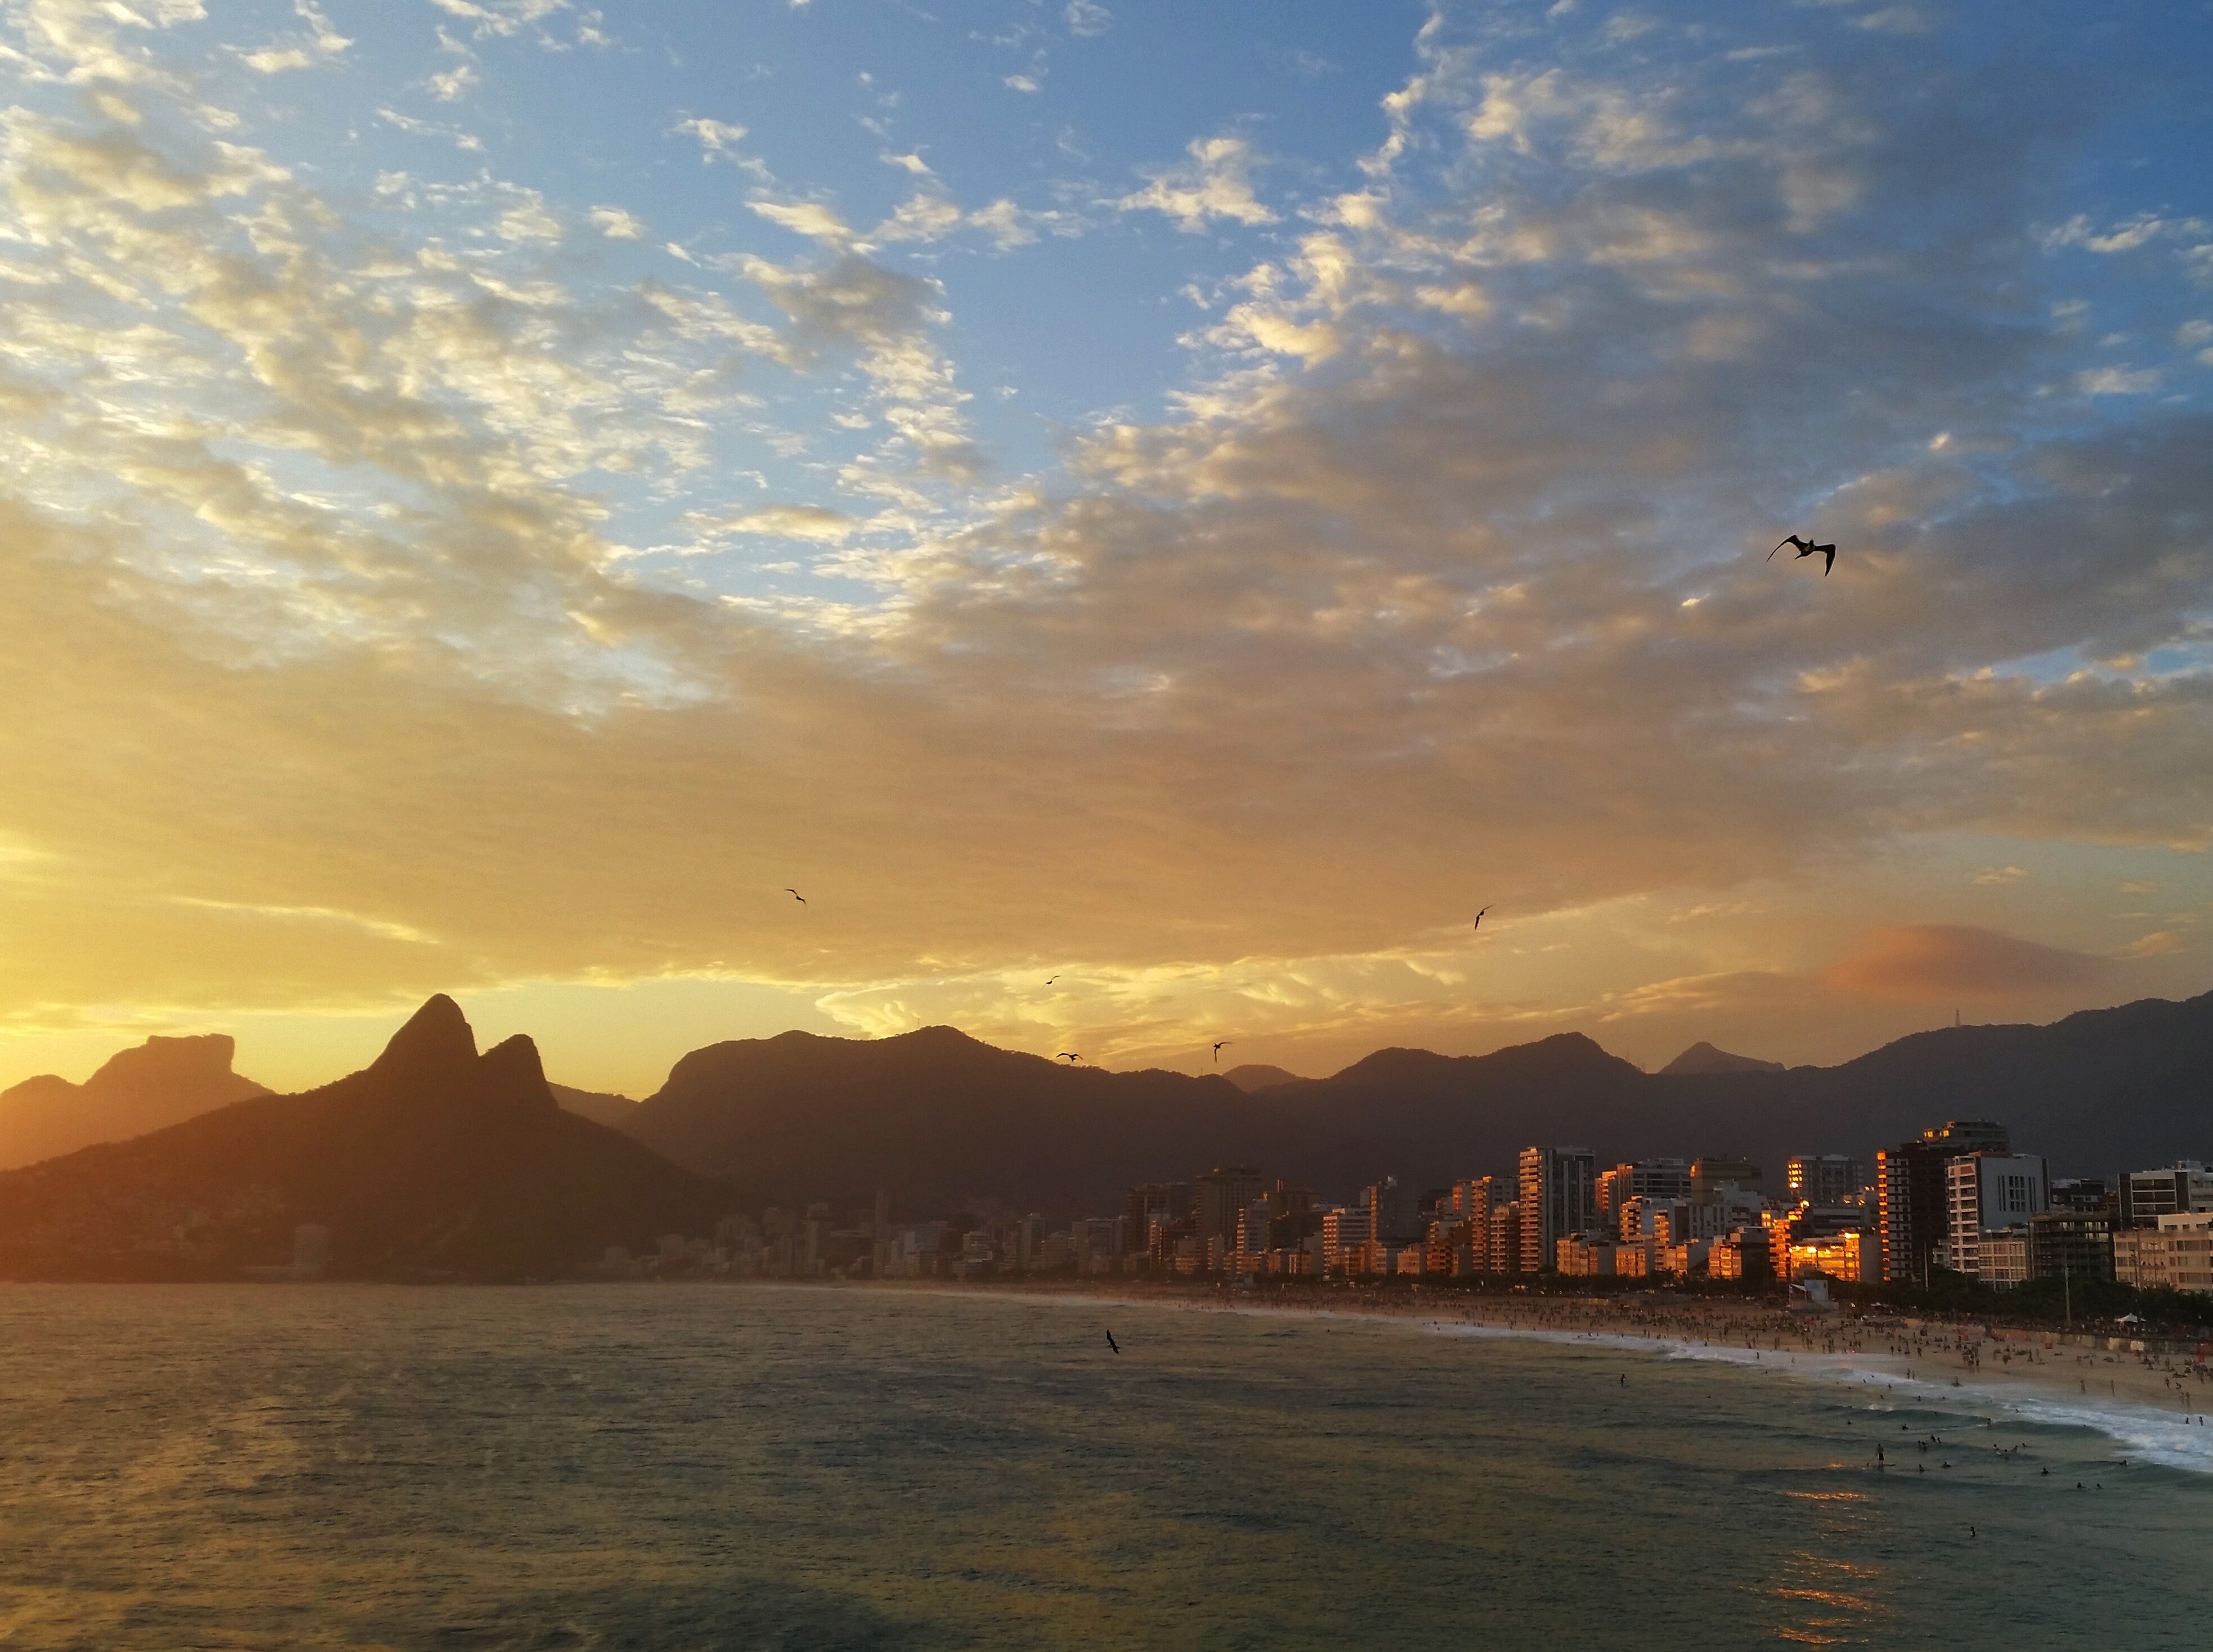 Sunset at Ipanema Beach from Arpoador, Rio de Janeiro, Brazil